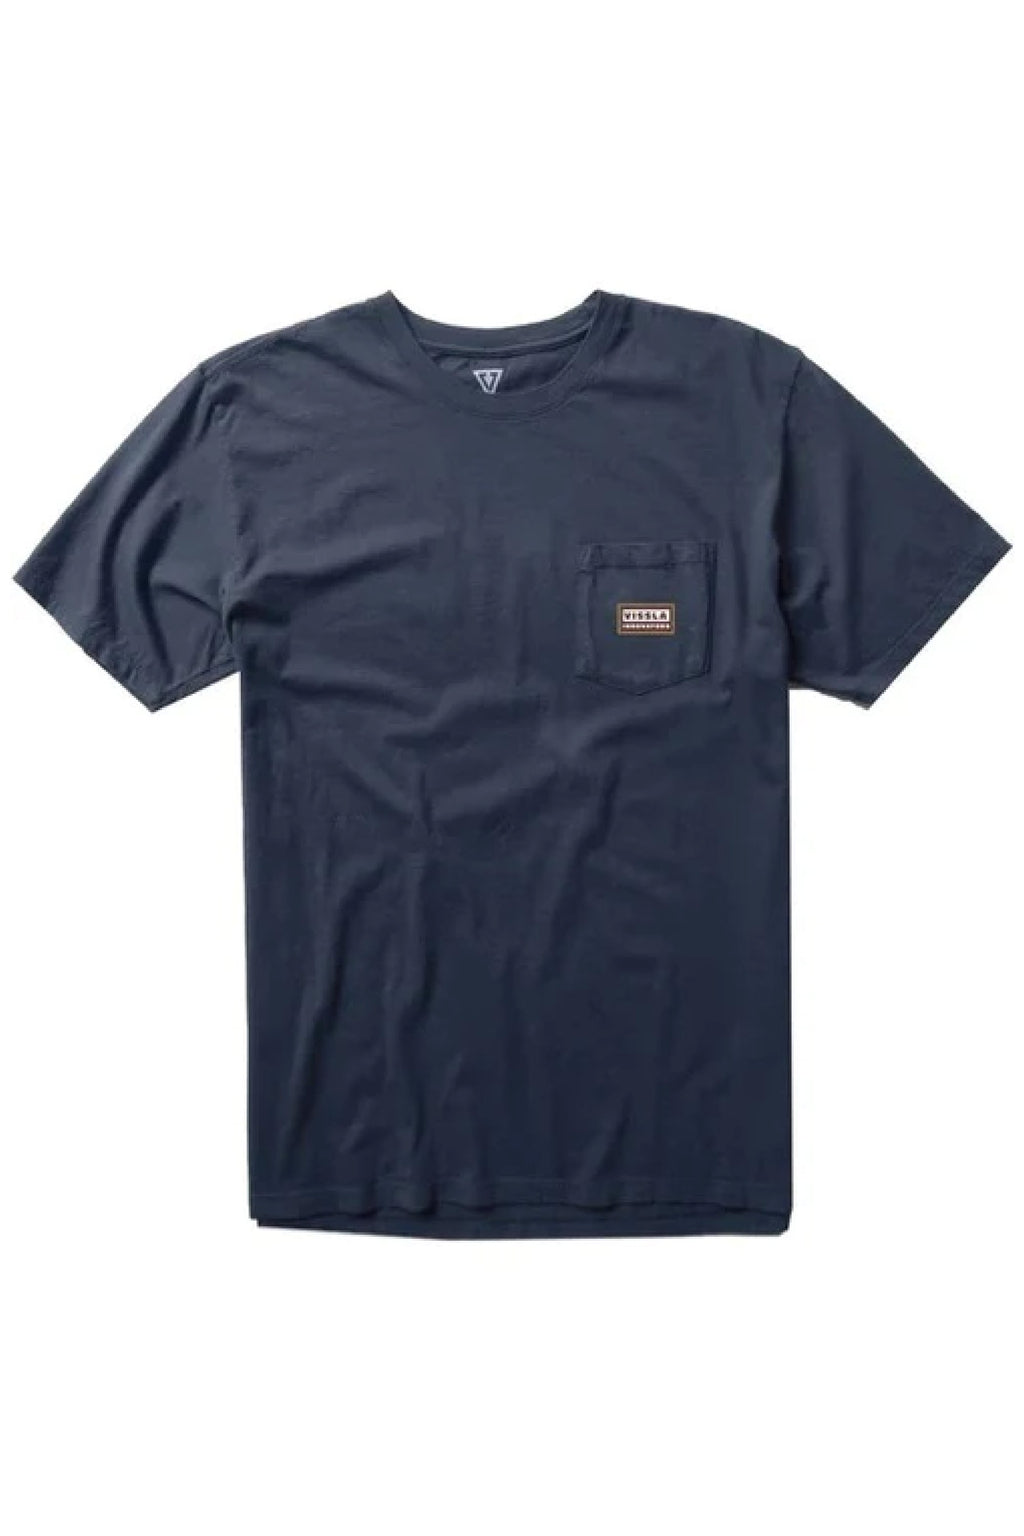 Vissla - Brotherhood Premium Pocket T-Shirt